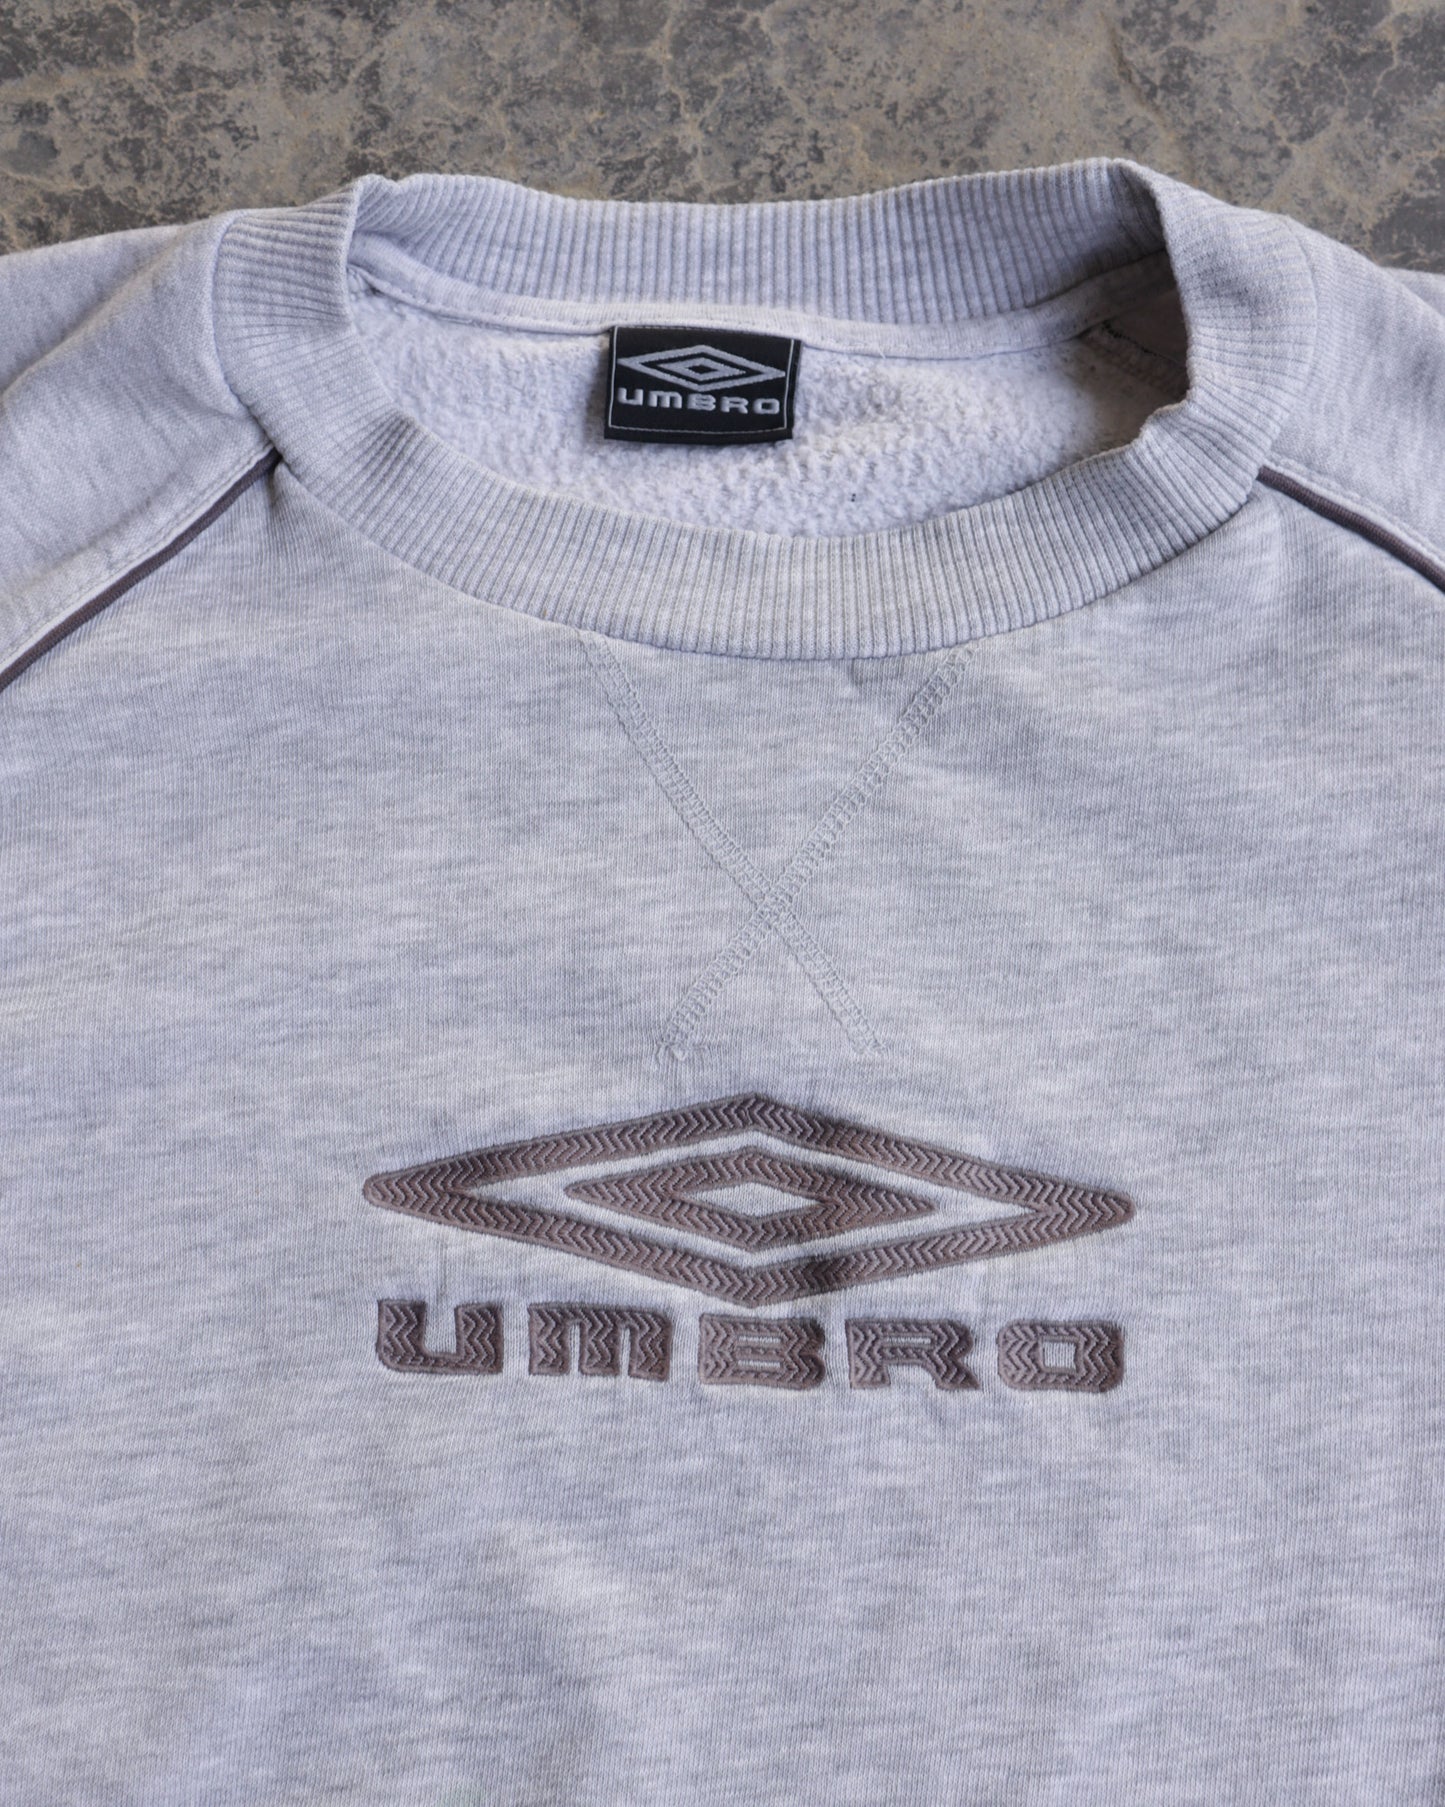 90s UMBRO Gray Crewneck Sweatshirt - XL